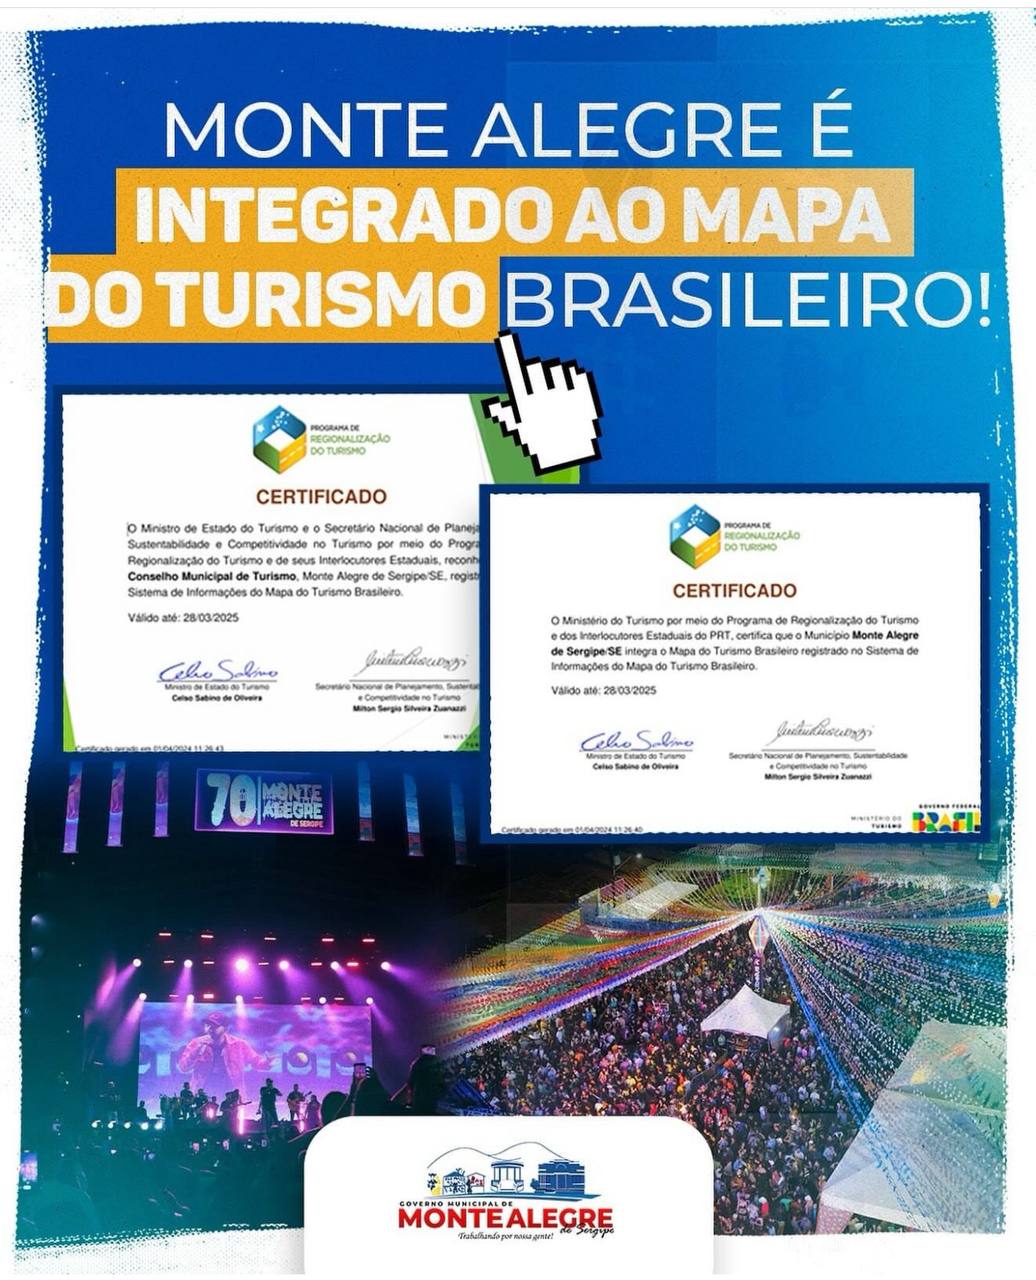 Monte Alegre é integrado ao Mapa do Turismo Brasileiro